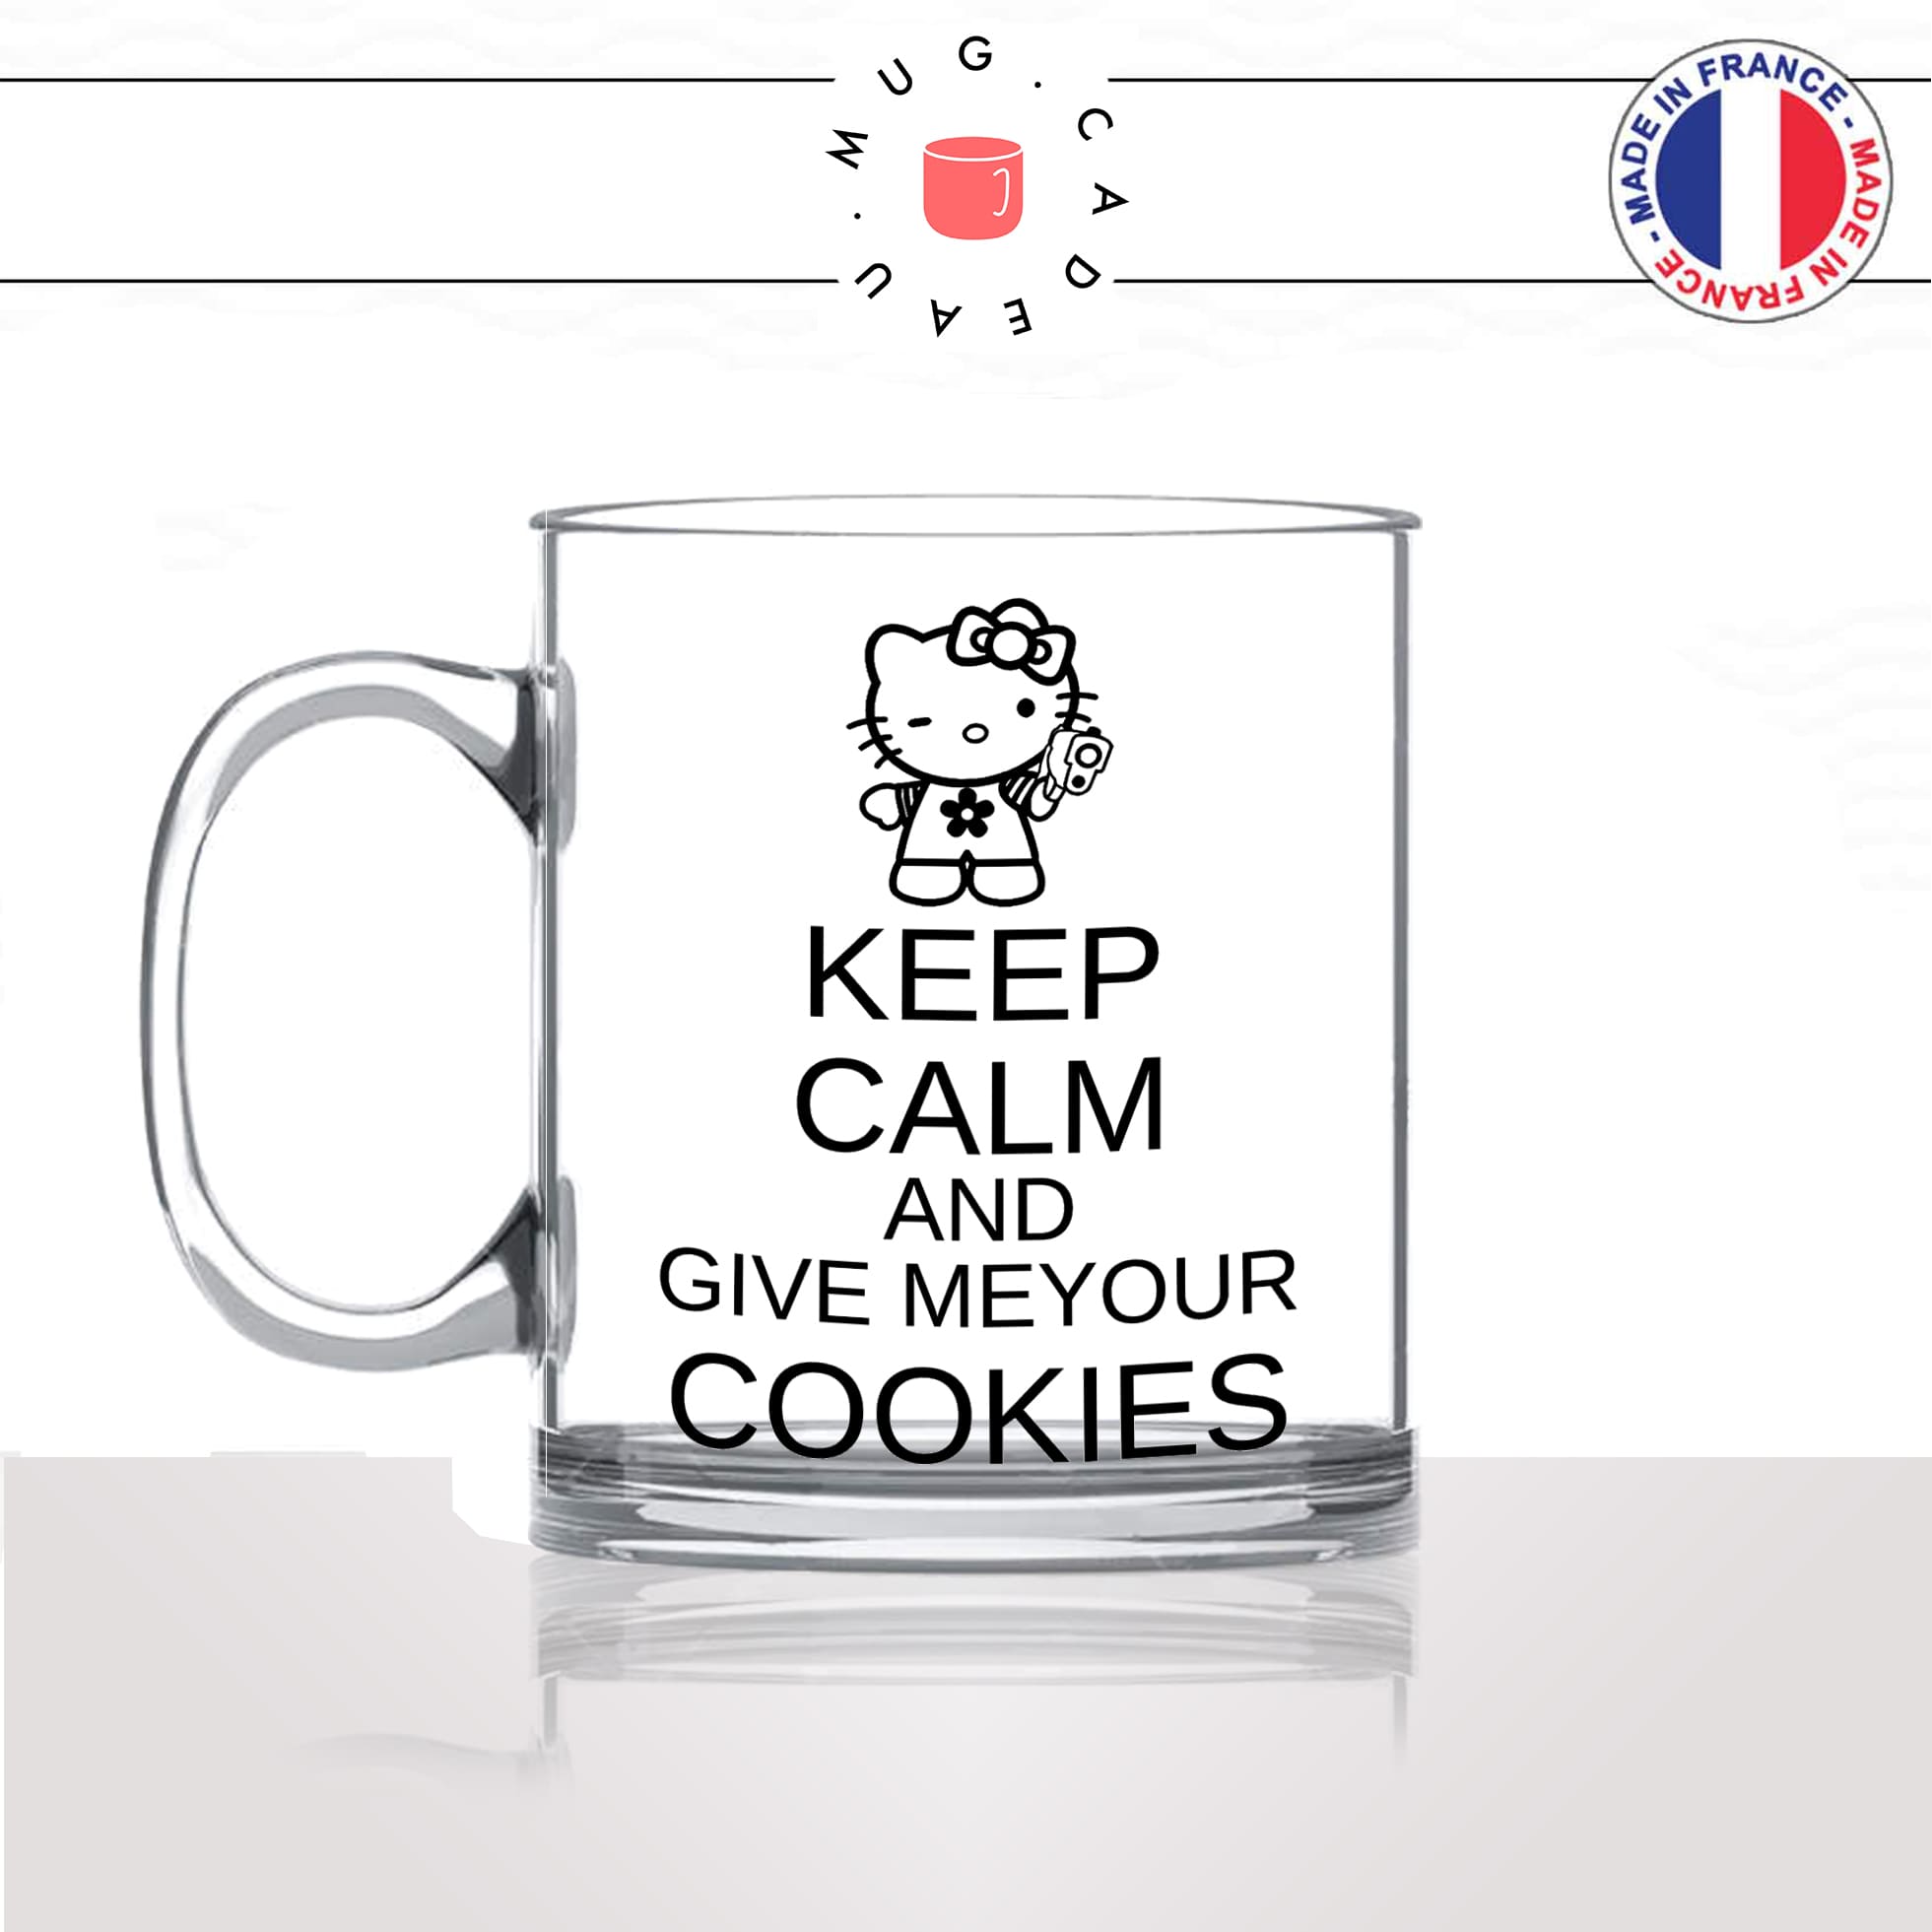 mug-tasse-en-verre-transparent-glass-keep-calm-and-give-me-your-cookies-hello-kitty-chat-arme-fusil-stylé-humour-idée-cadeau-fun-cool-café-thé